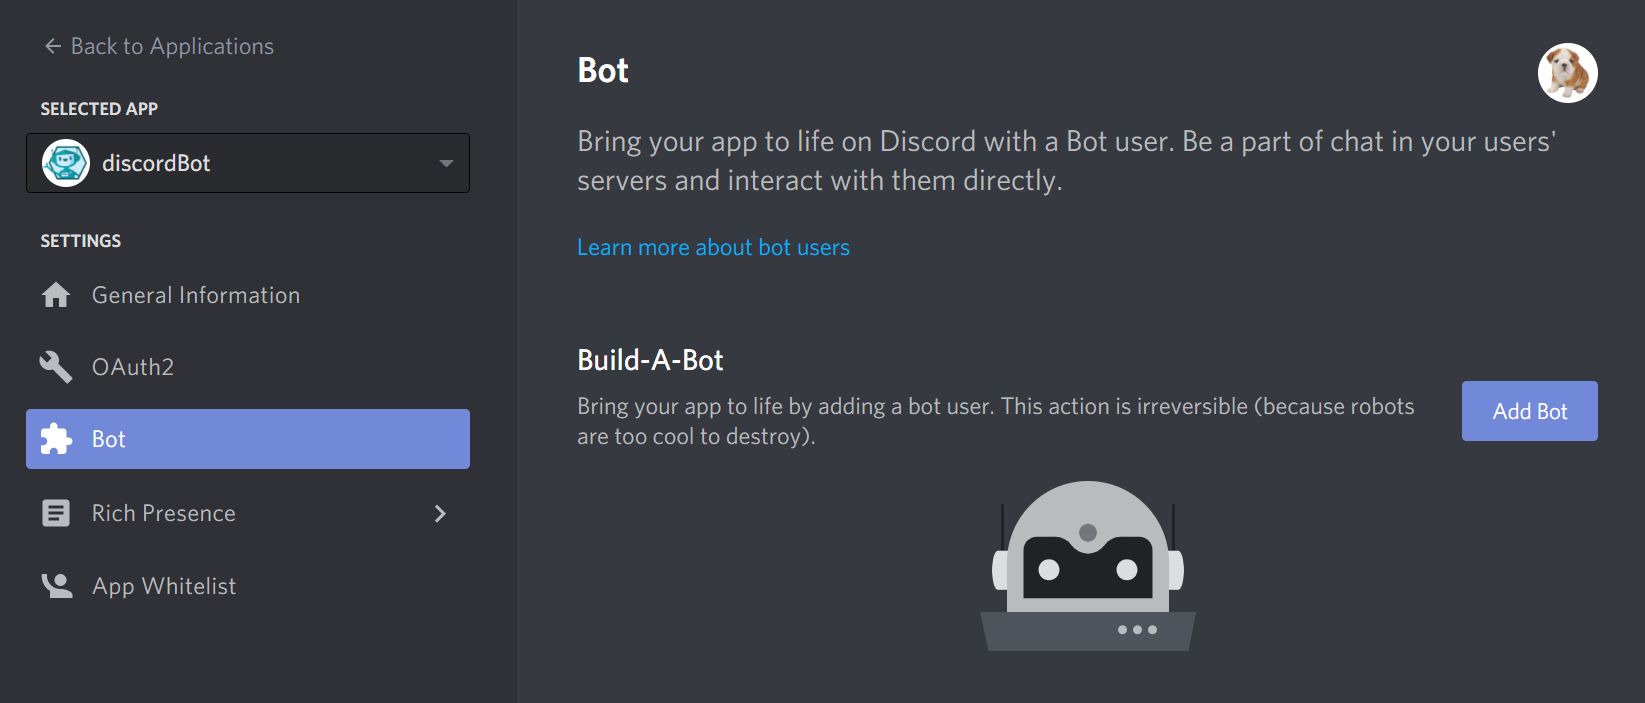 Adding a new Discord bot